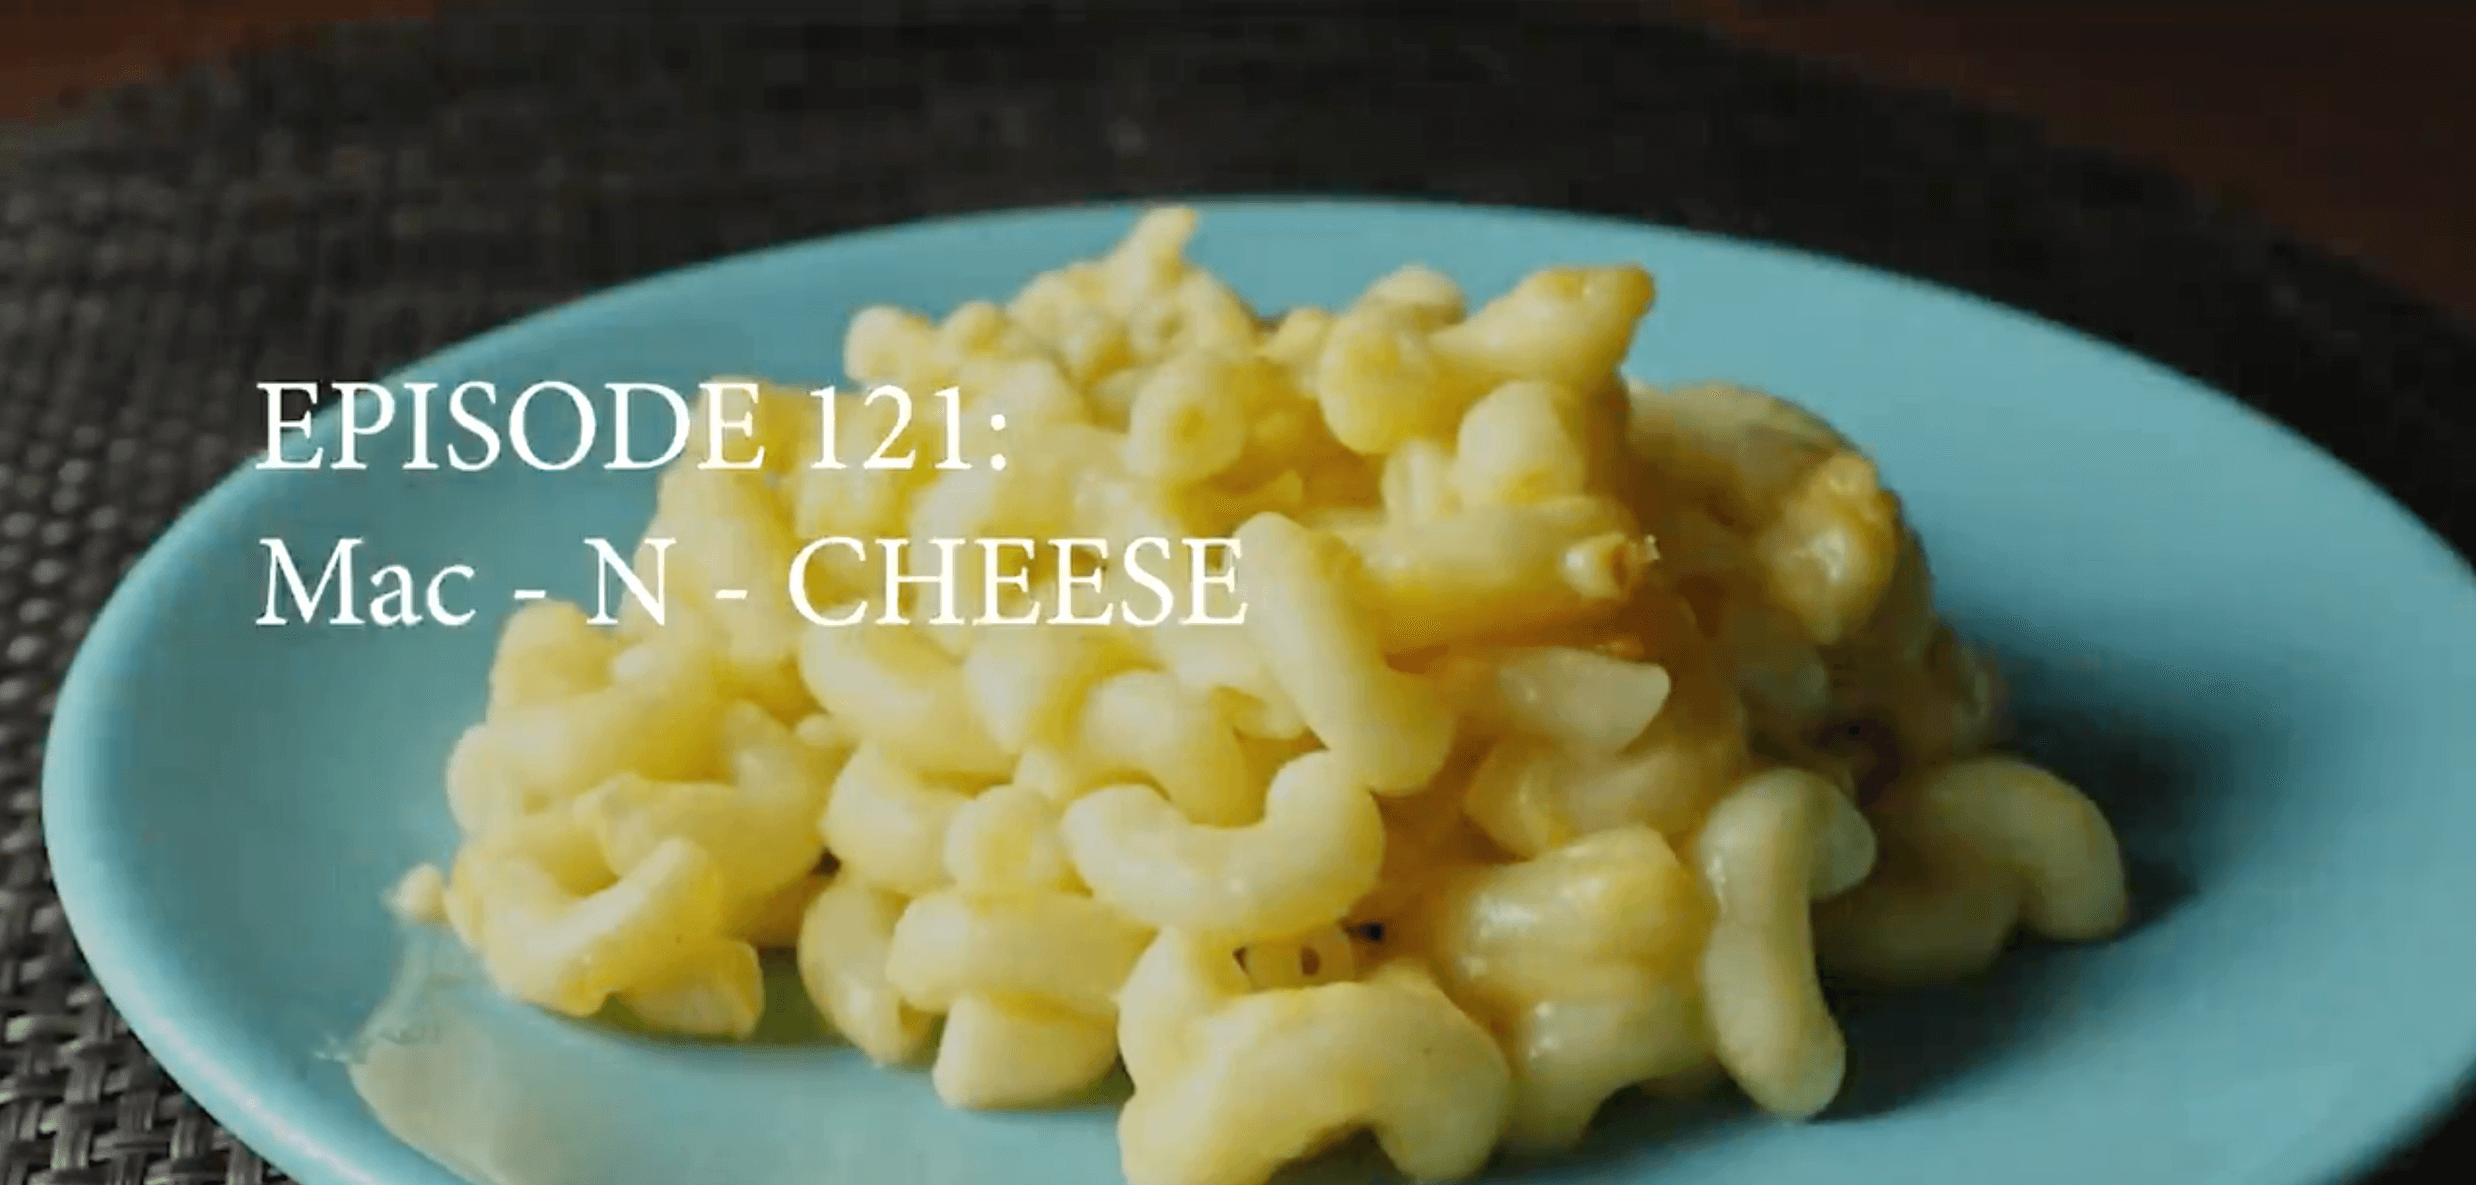 Learning Cool Stuff With Cavett: Mac n Cheese Video